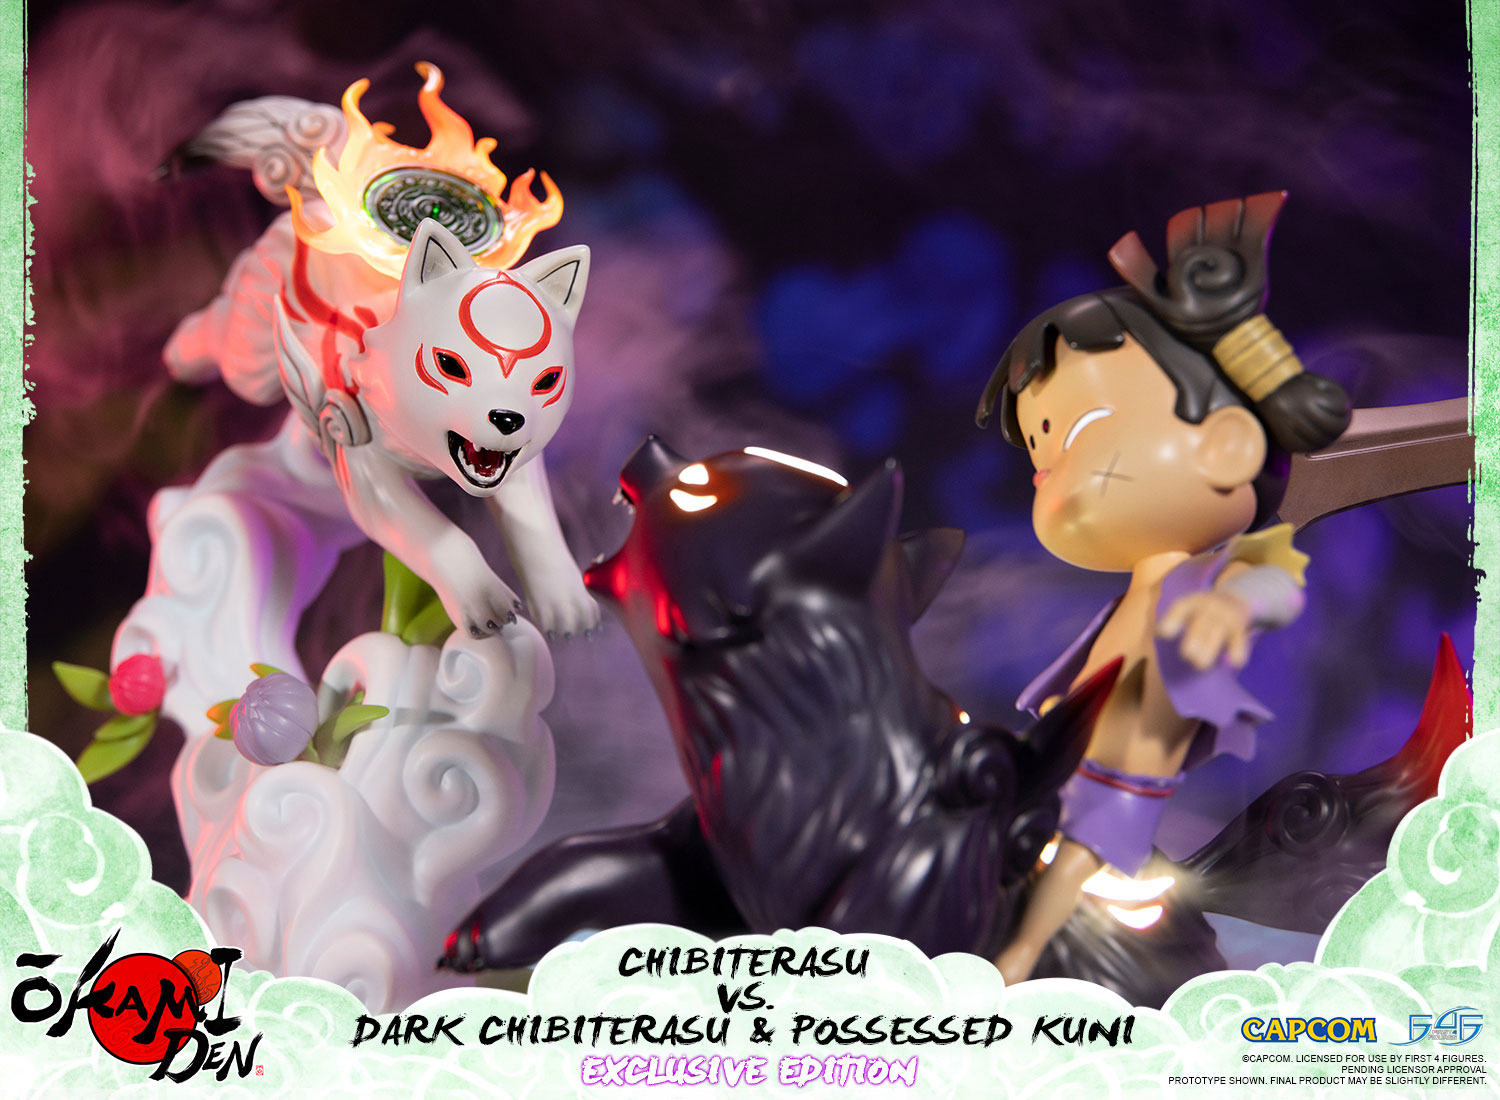 Chibiterasu vs. Dark Chibiterasu & Possessed Kuni (Exclusive Edition)